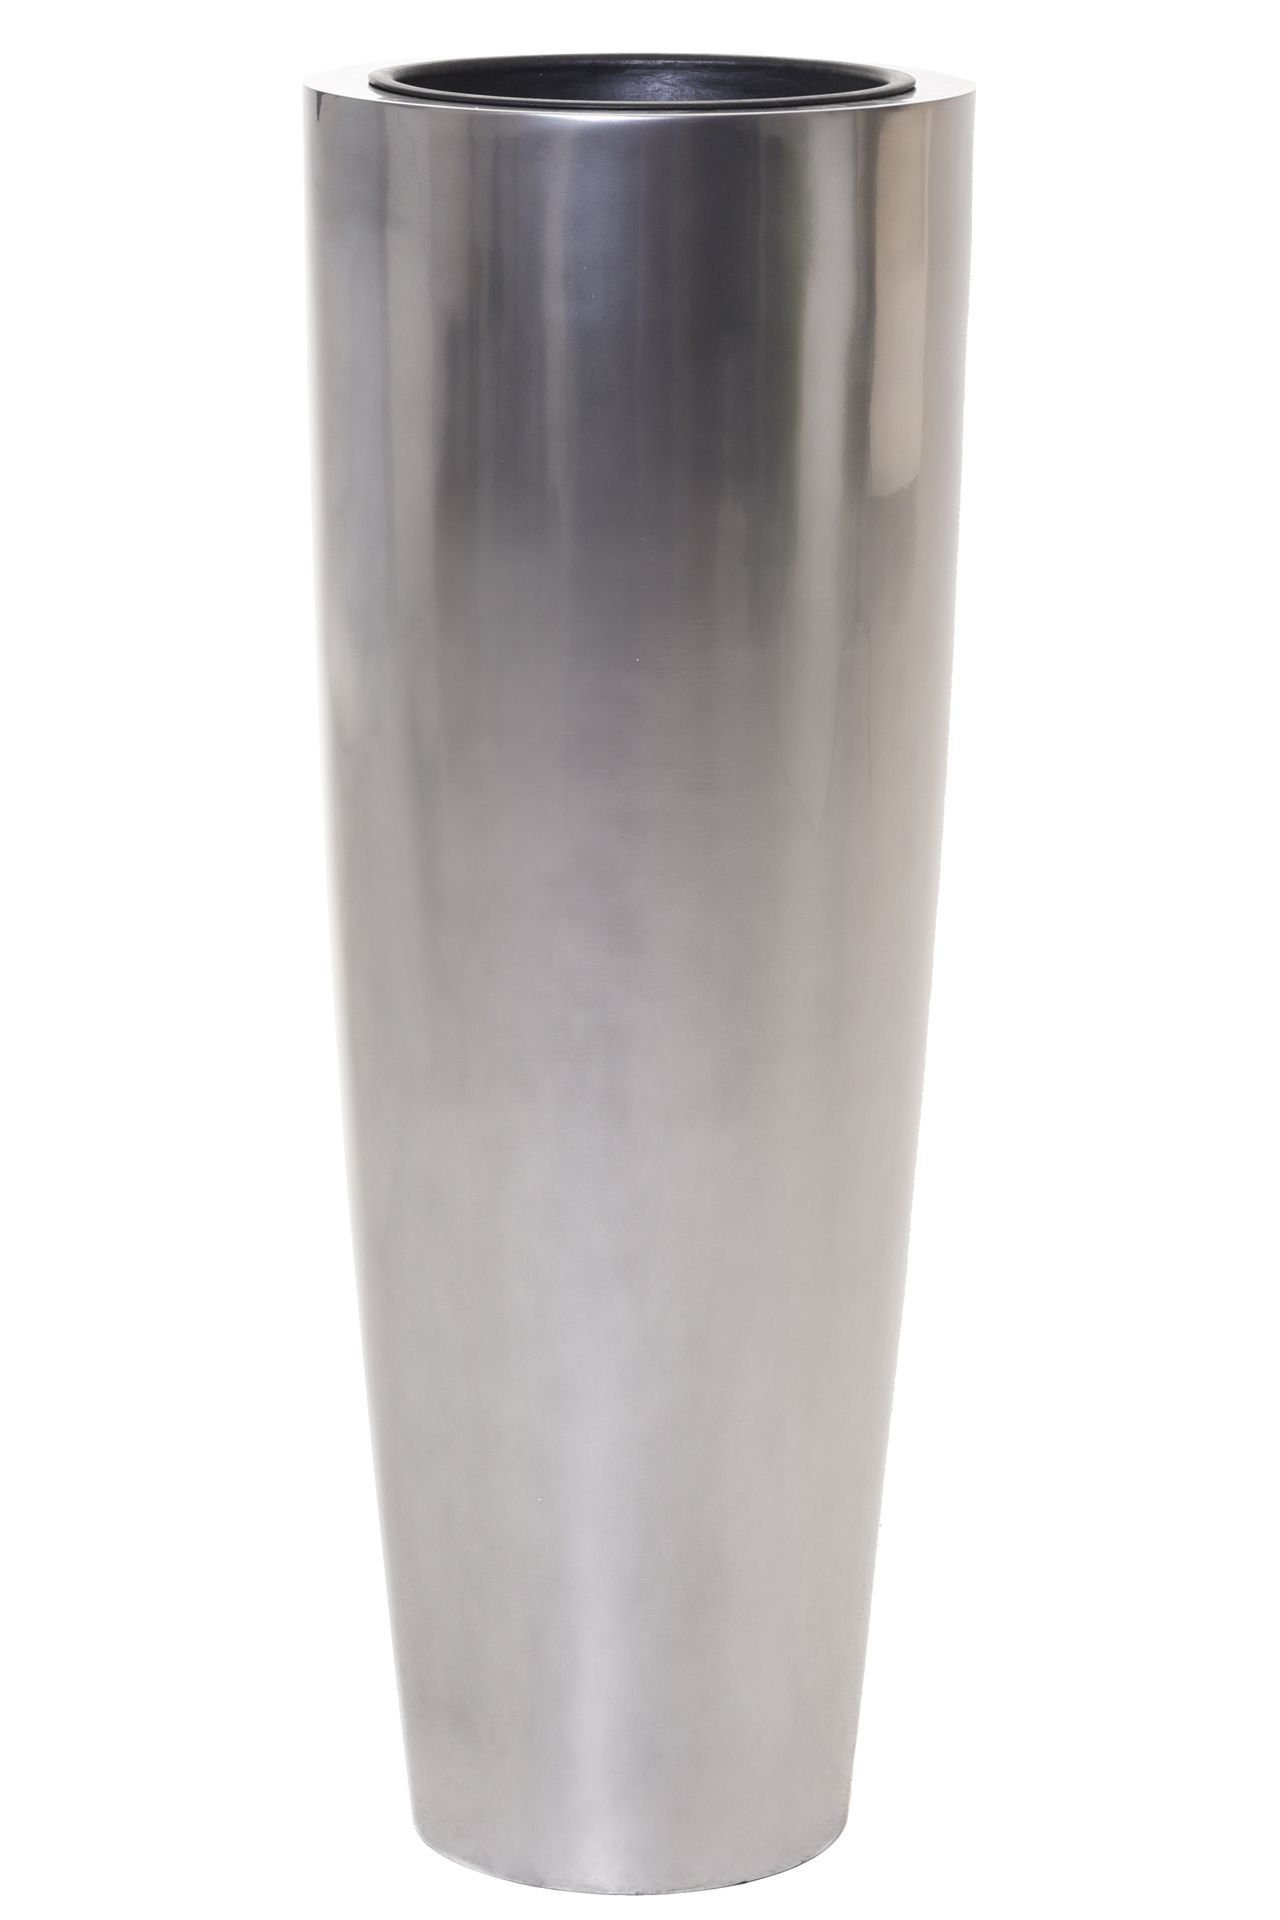 VIVANNO Pflanzkübel Pflanzkübel Pflanzgefäß exklusiv PILA hoch Silber Metallic - 37x100